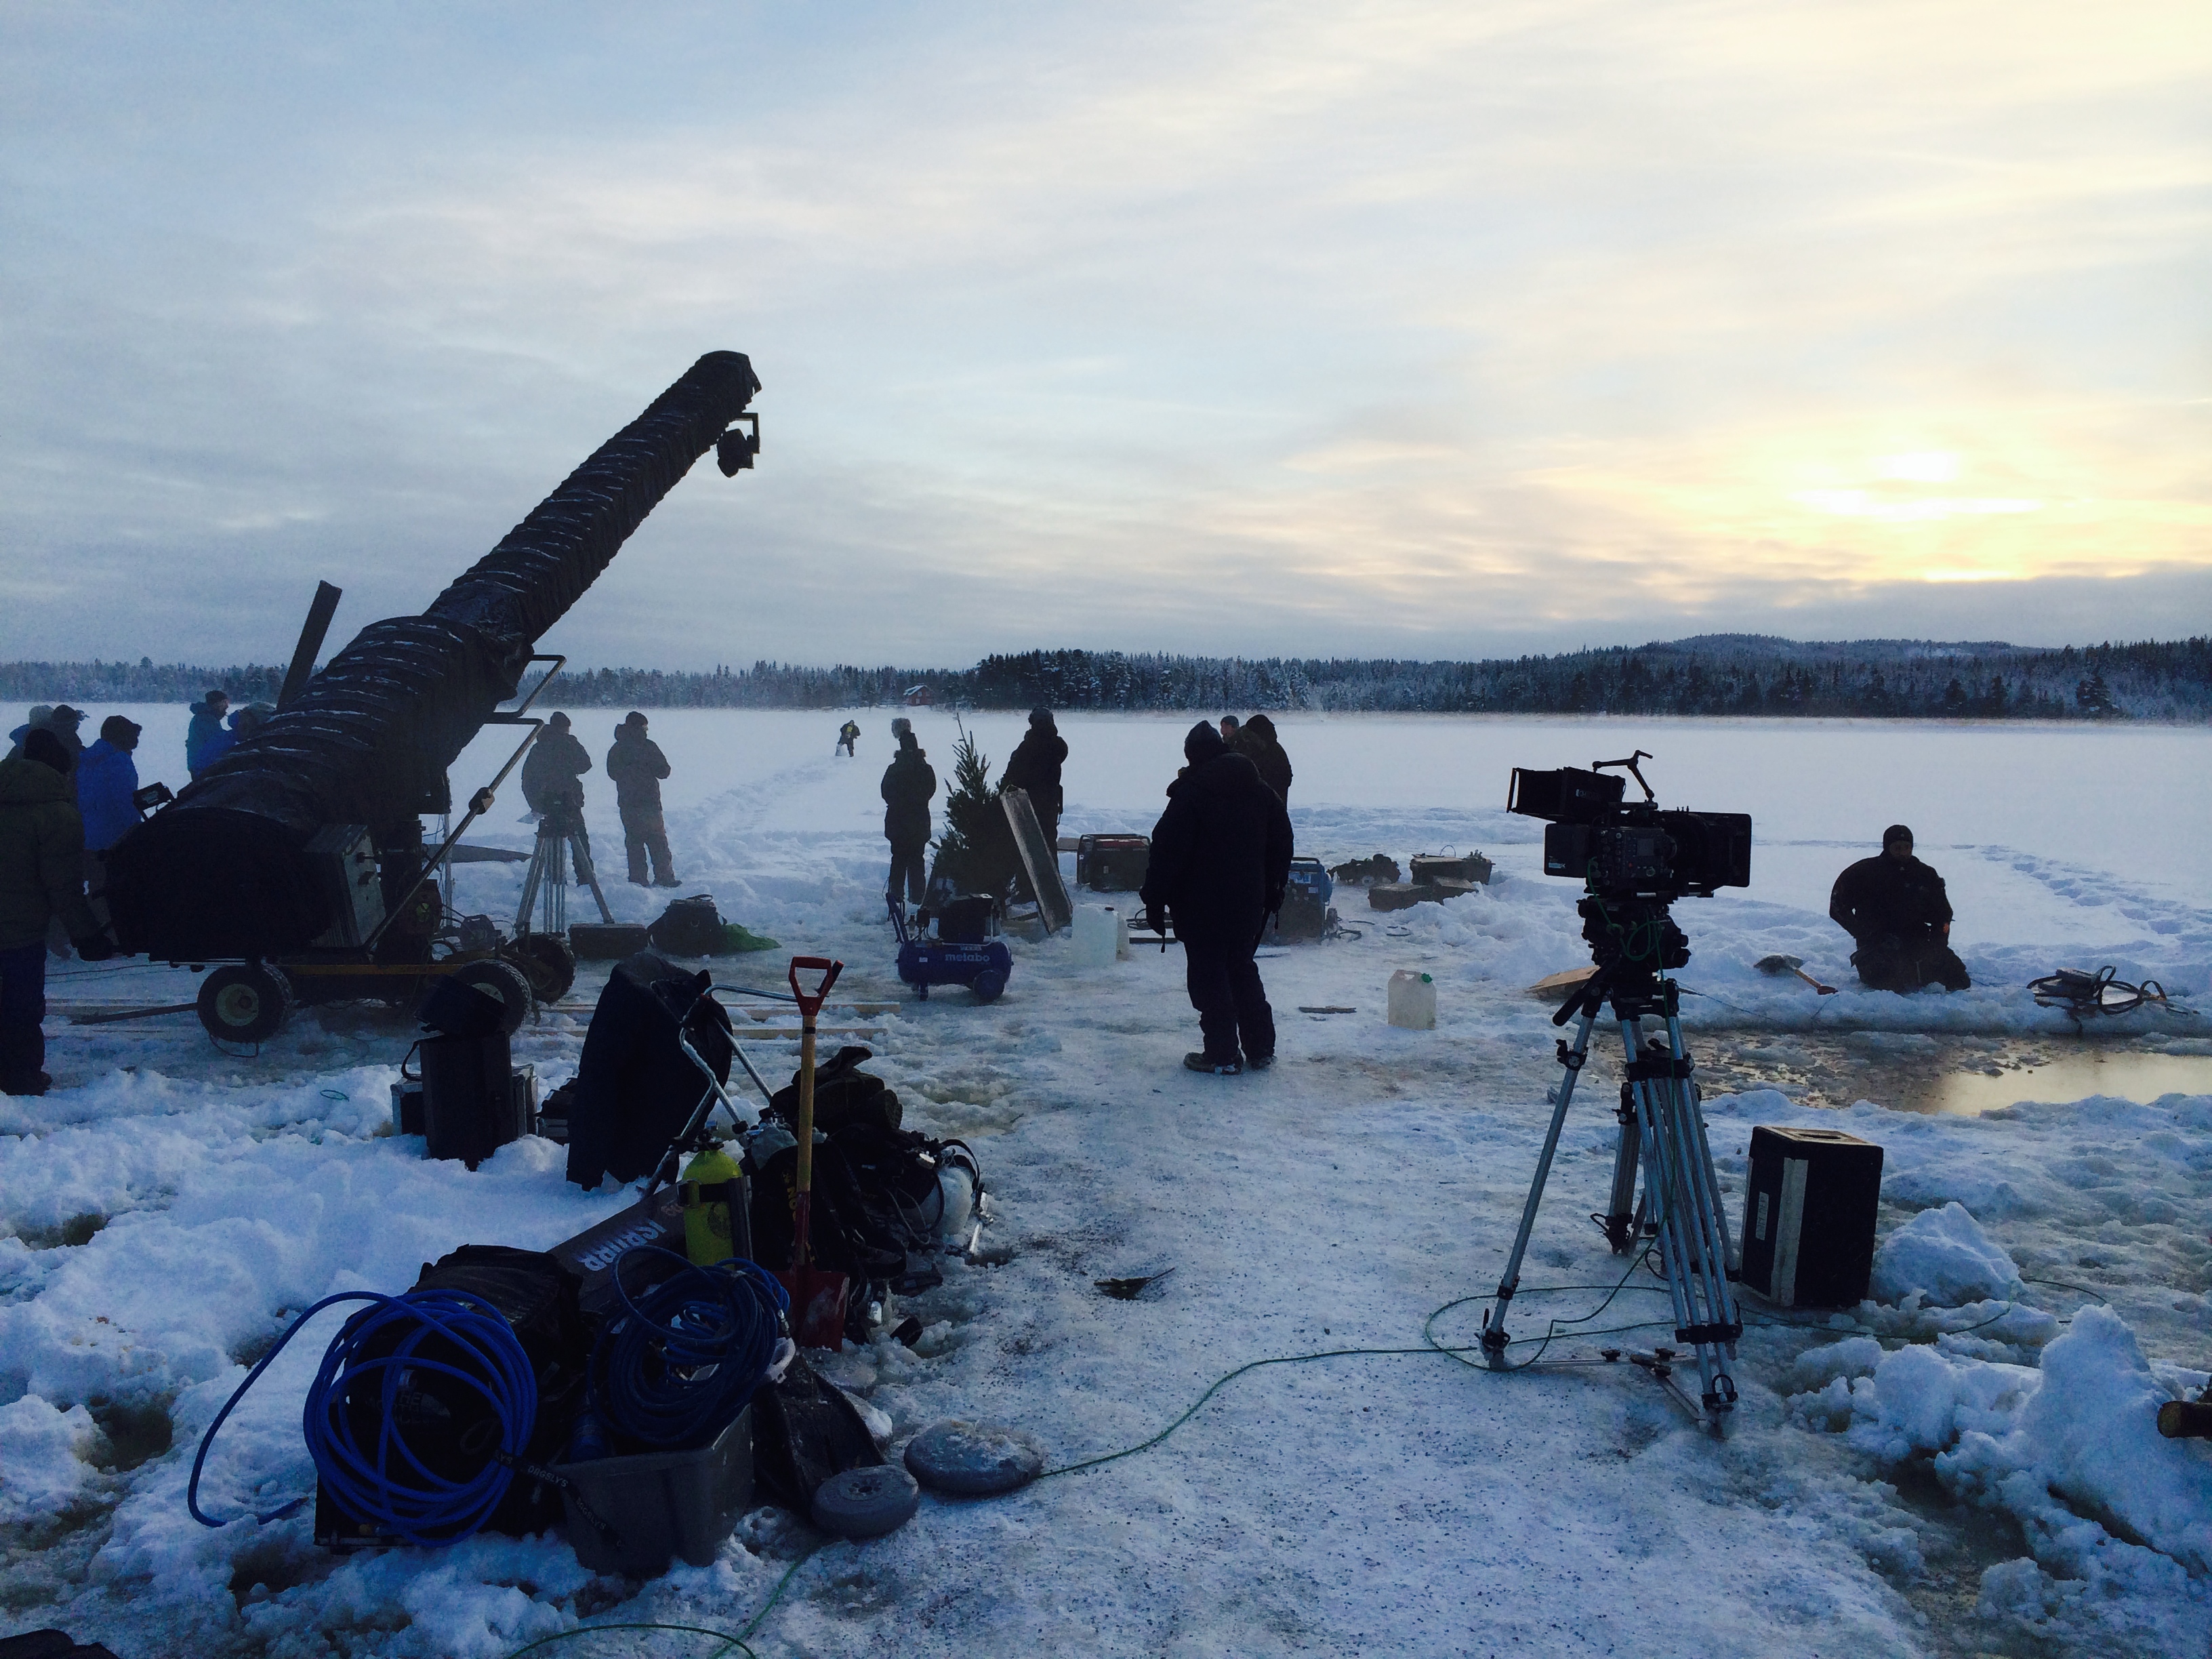 Lilyhammer Season 3. Filming at Sjursjøen in minus 20 degress Celsius with 30